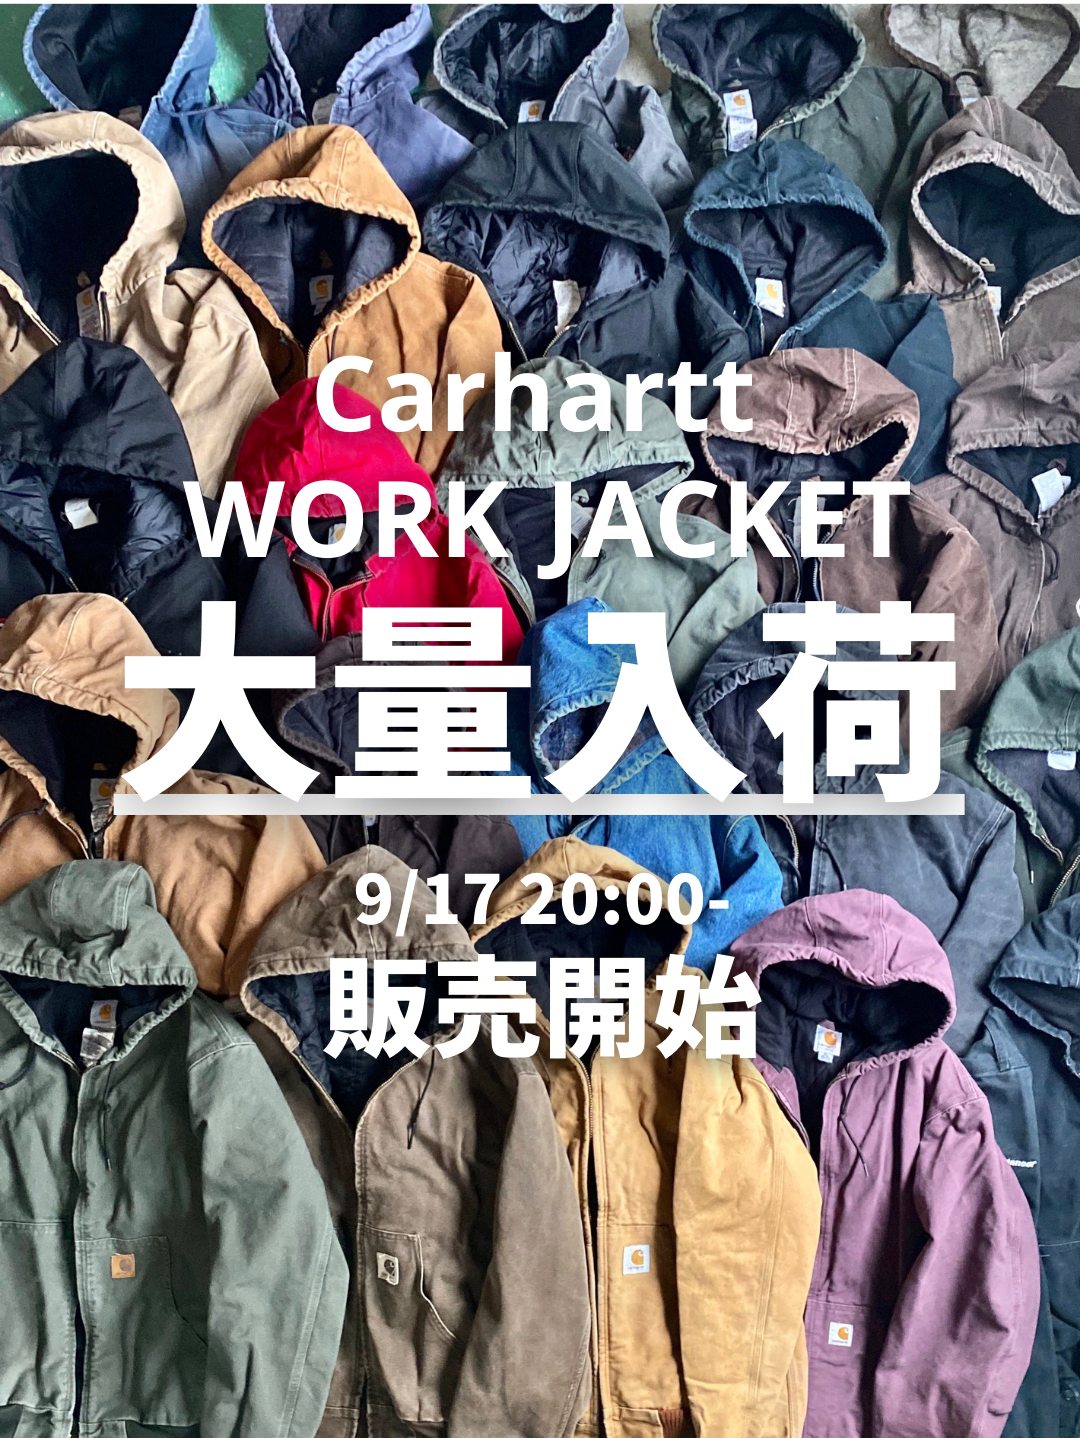 Carhartt JACKET大量入荷!!! 9/17 20:00より販売開始！